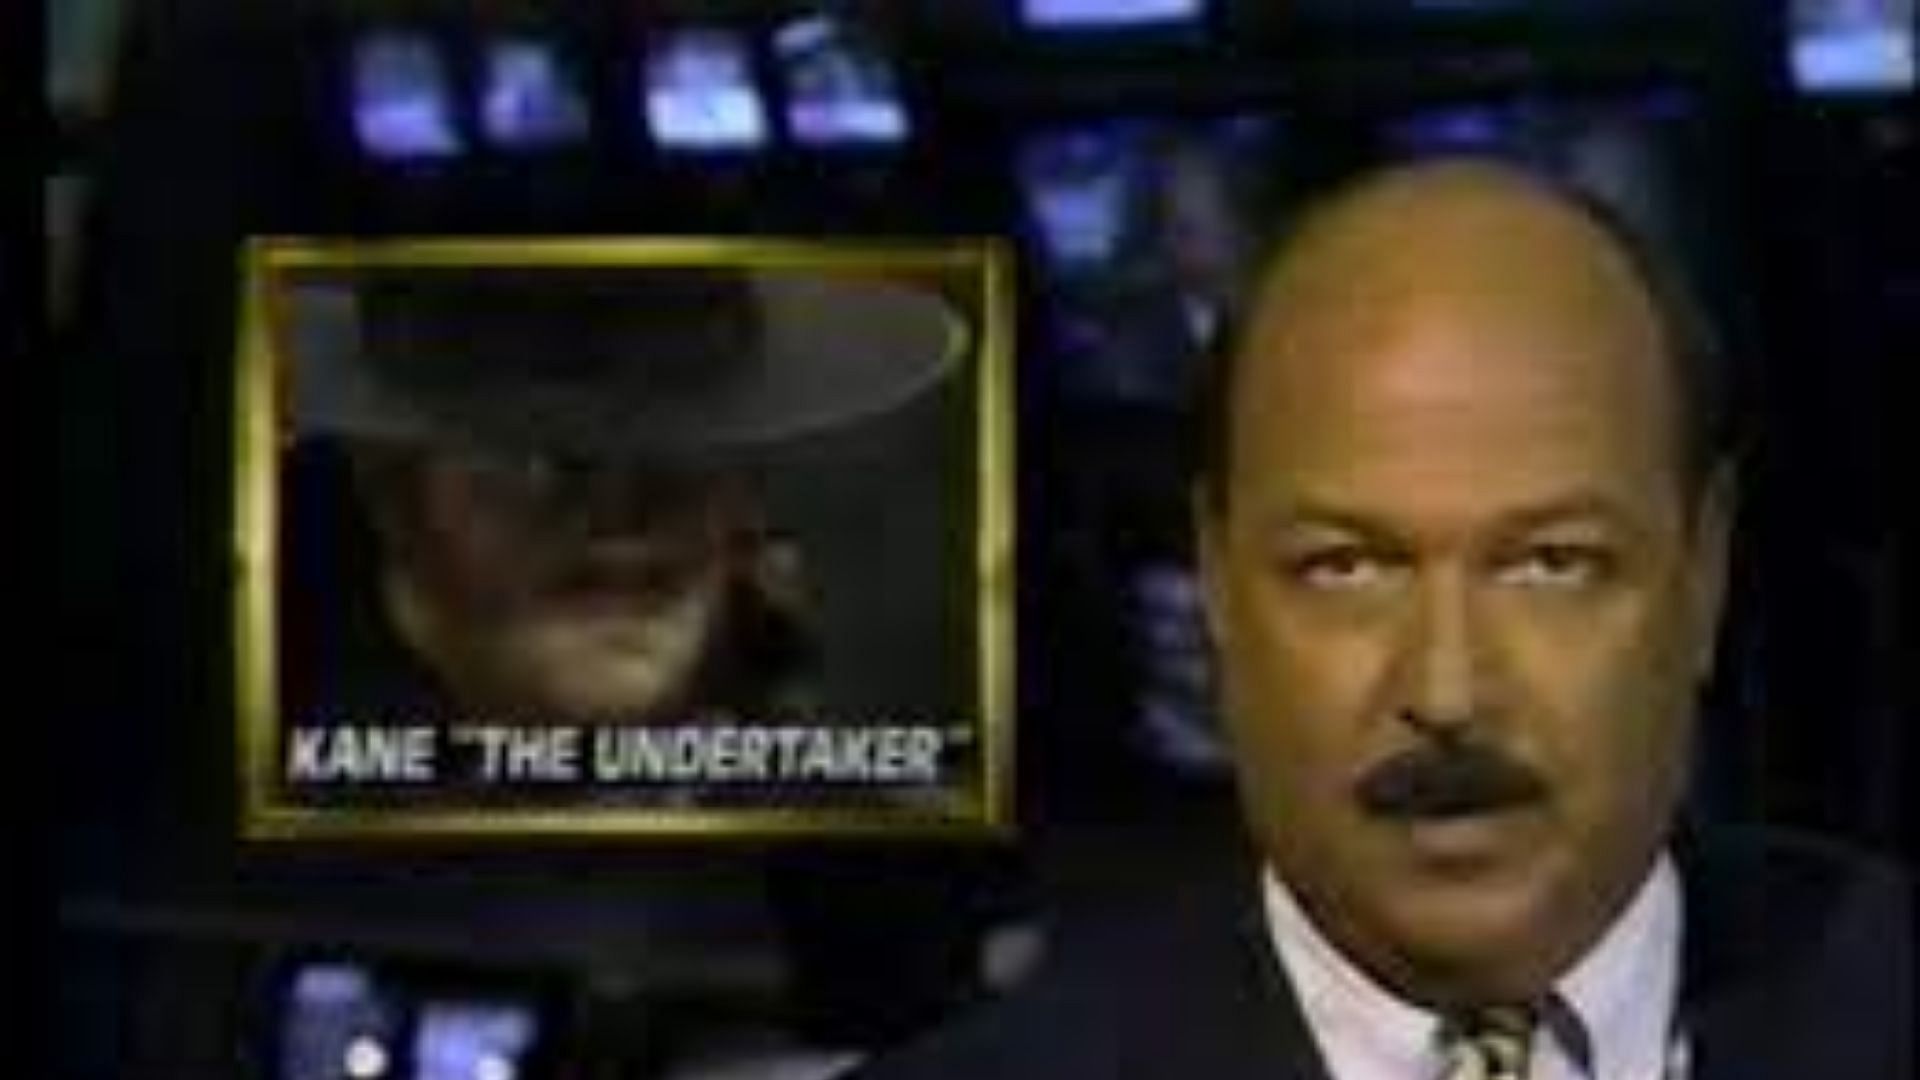 Mean Gene introducing Kane The Undertaker on WWE programming